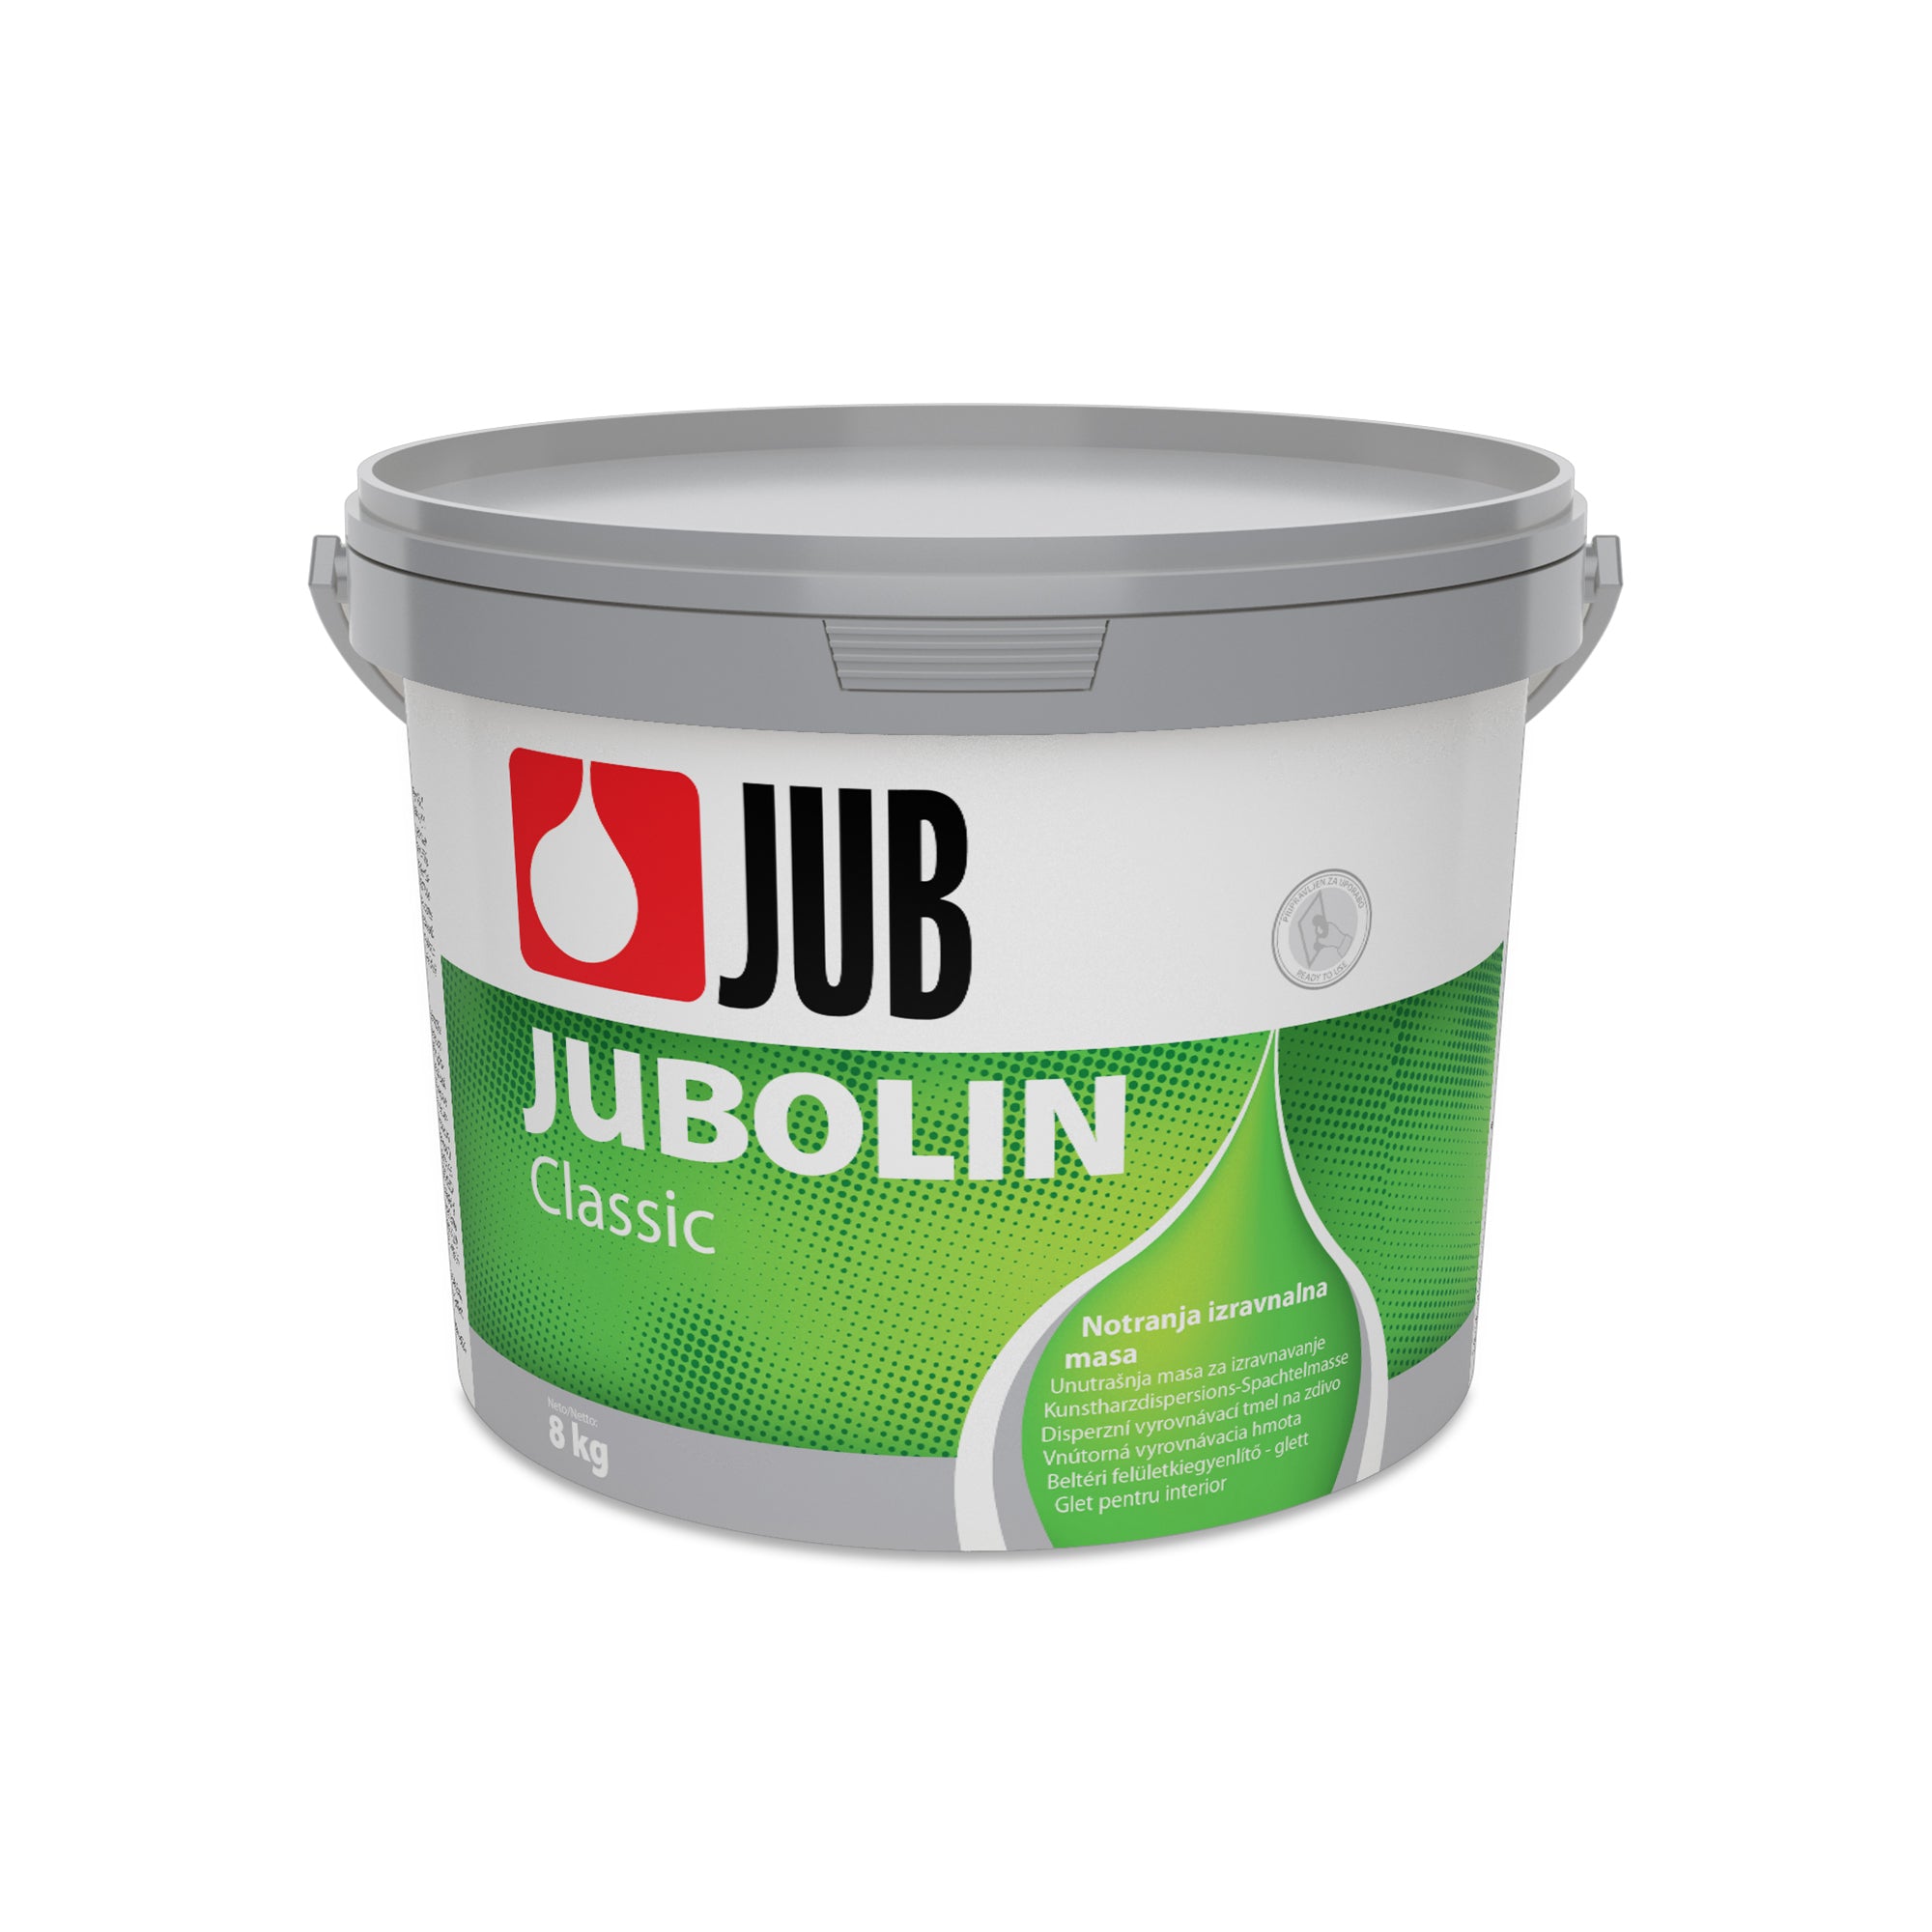 JUB JUBOLIN Classic disperzní stěrkový tmel na zdivo 3 kg